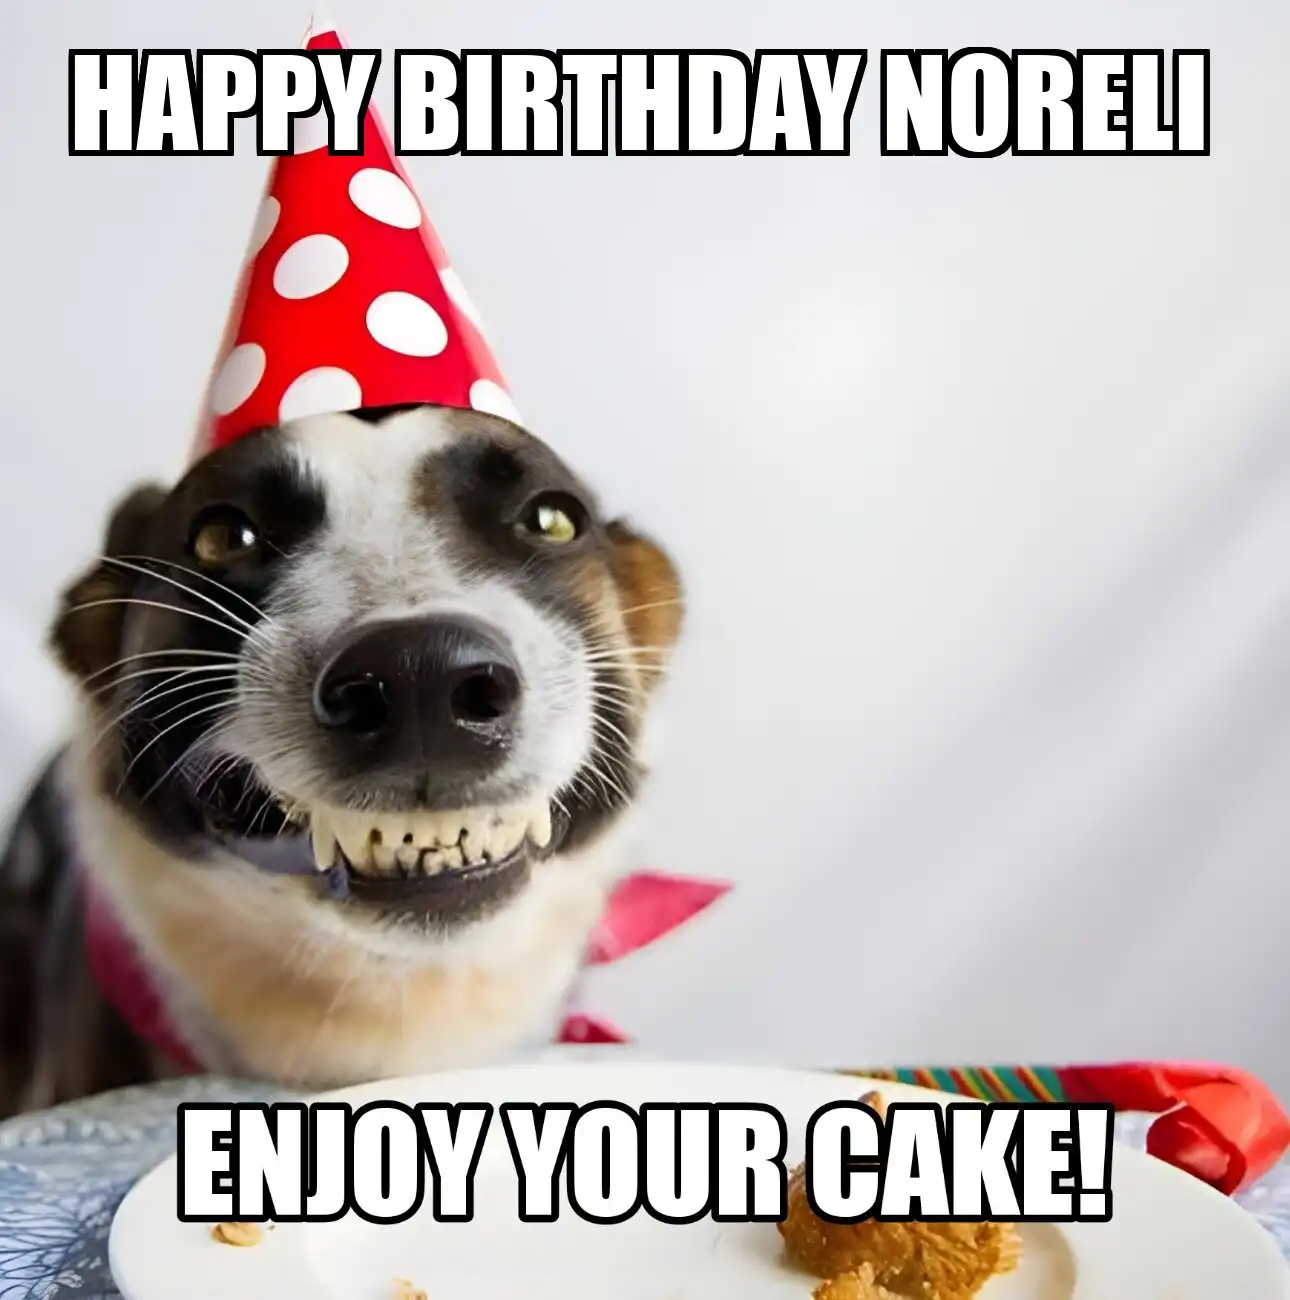 Happy Birthday Noreli Enjoy Your Cake Dog Meme